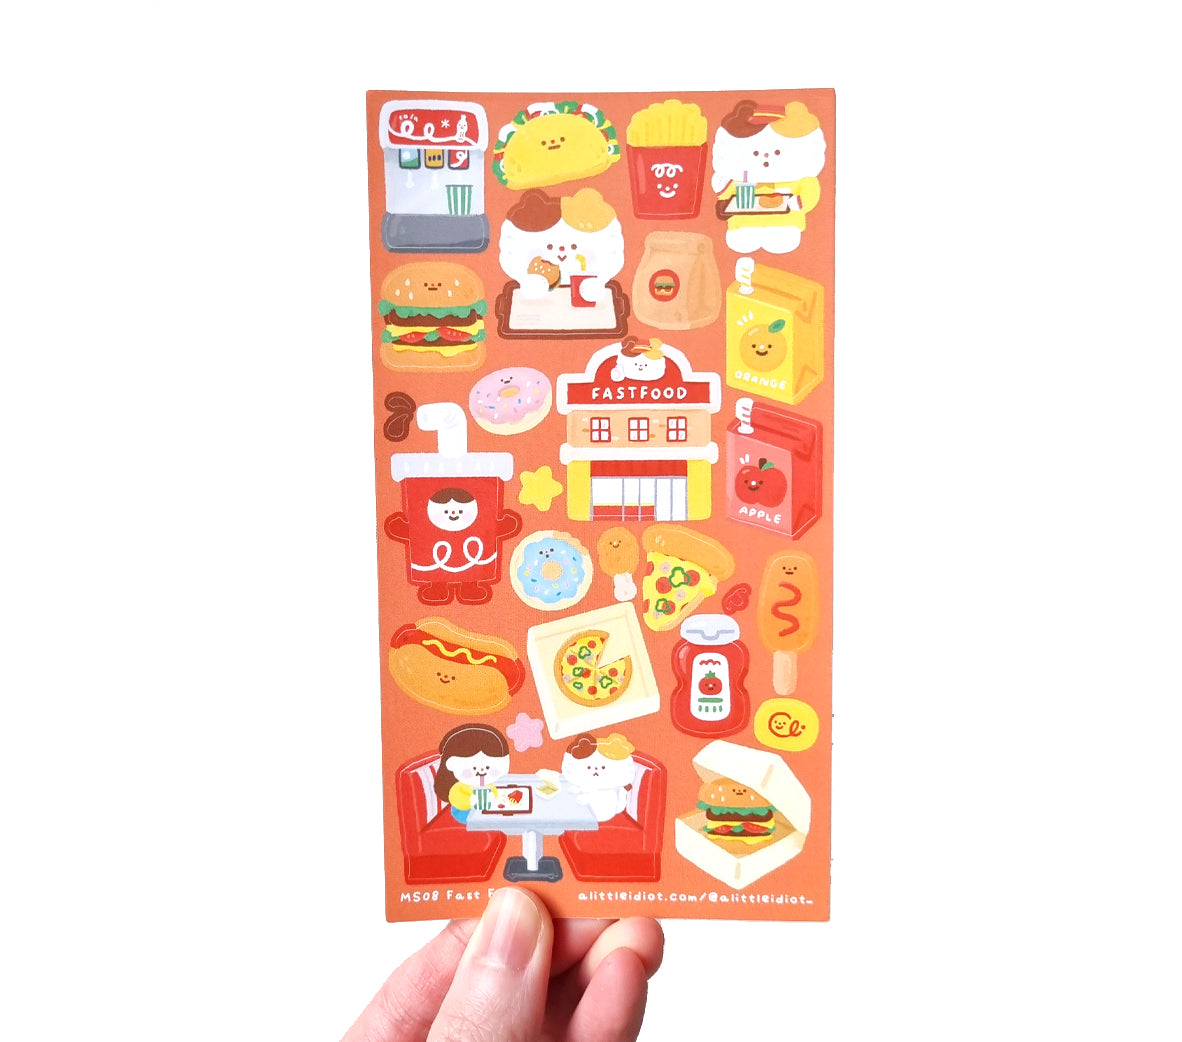 Fast Food Sticker Sheet